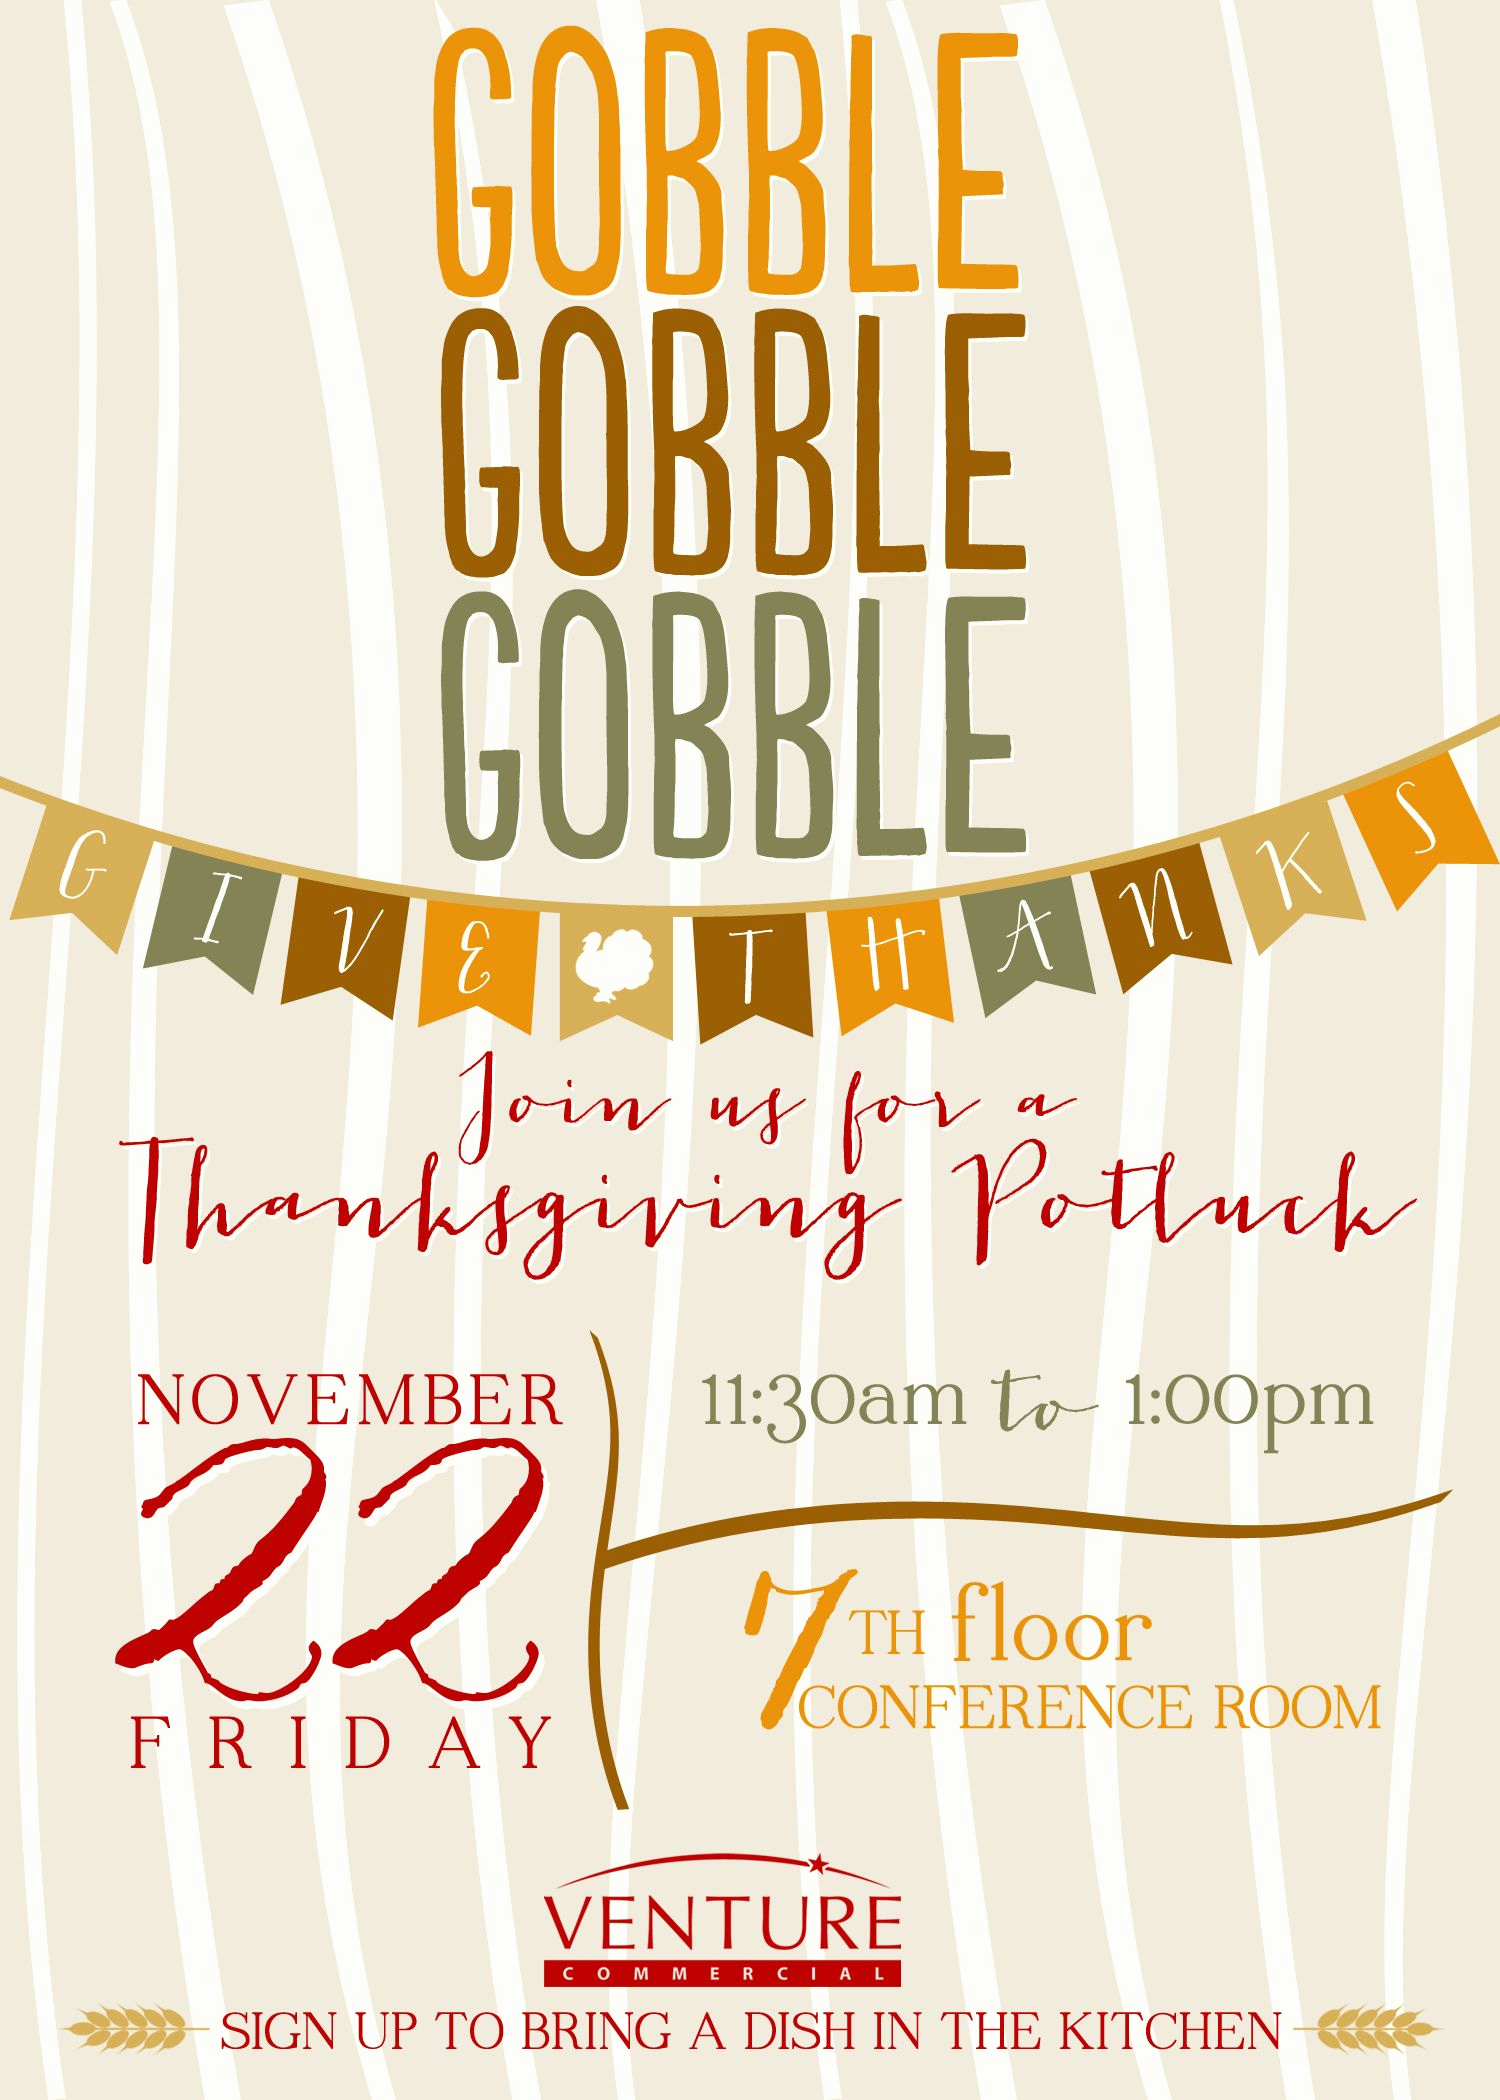 Funny Thanksgiving Invitation Wording New Gobble Gobble Gobble &amp; Give Thanks Thanksgiving Potluck